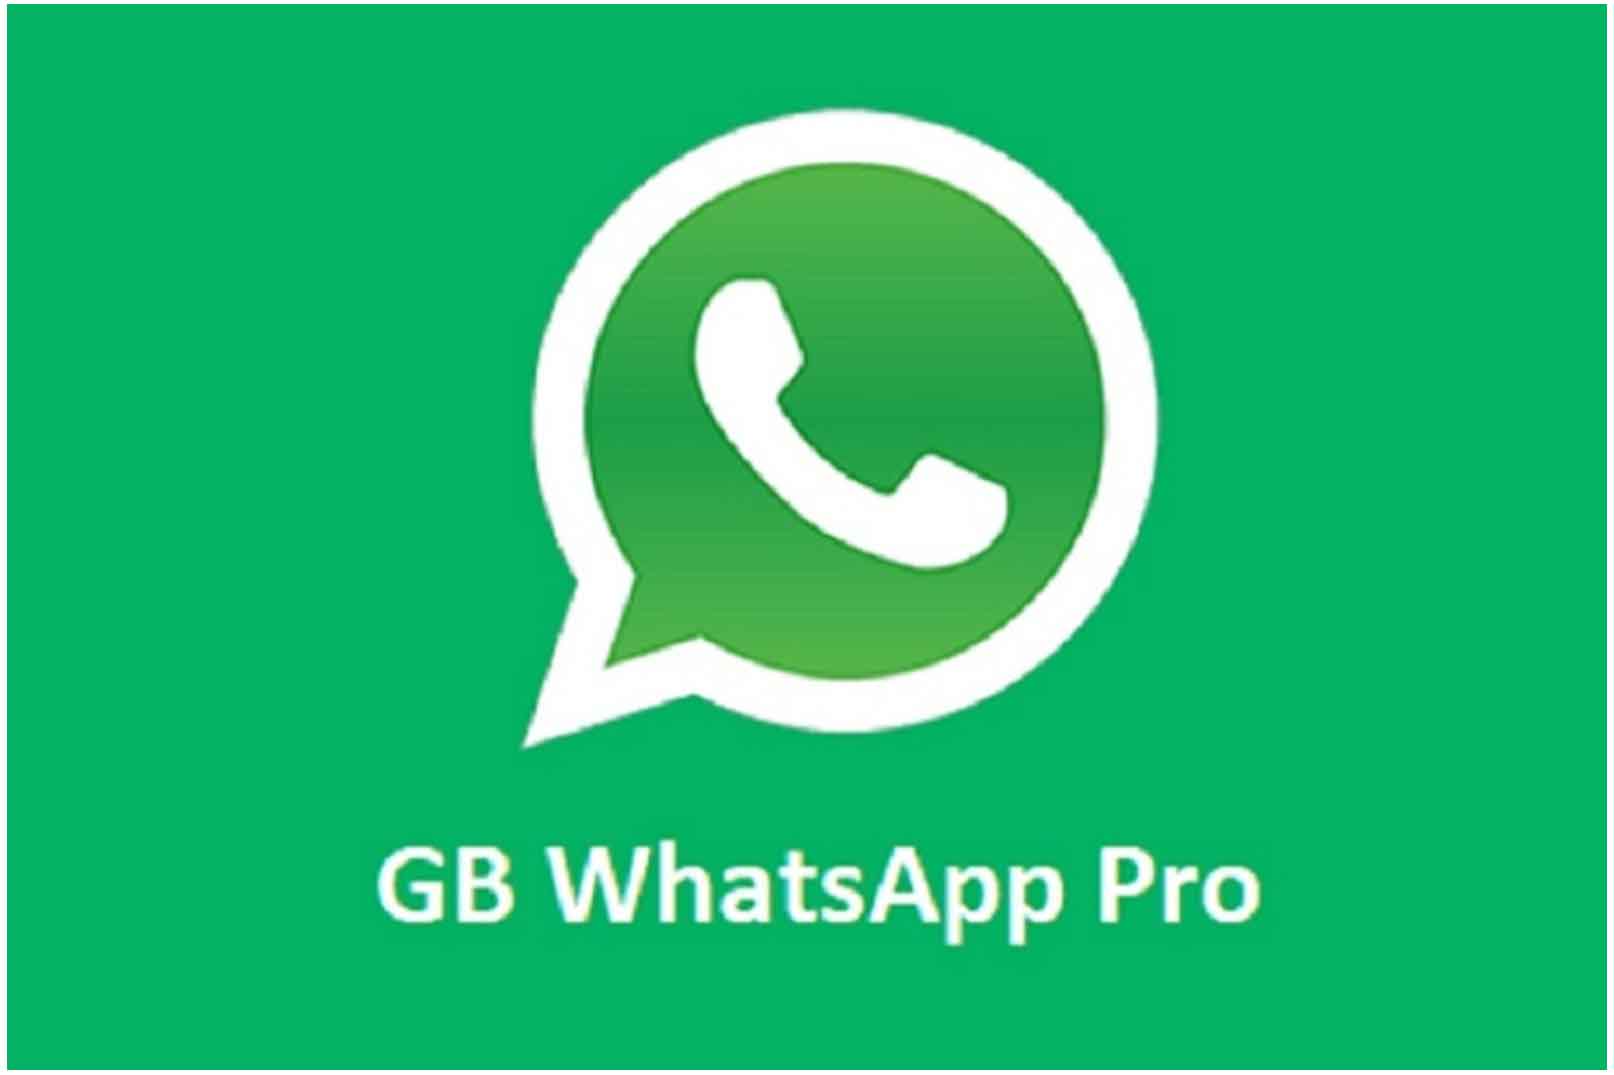 Download GB WhatsApp Pro v17.55 APK Resmi, WA GB Terbaru Oktober Anti Banned!